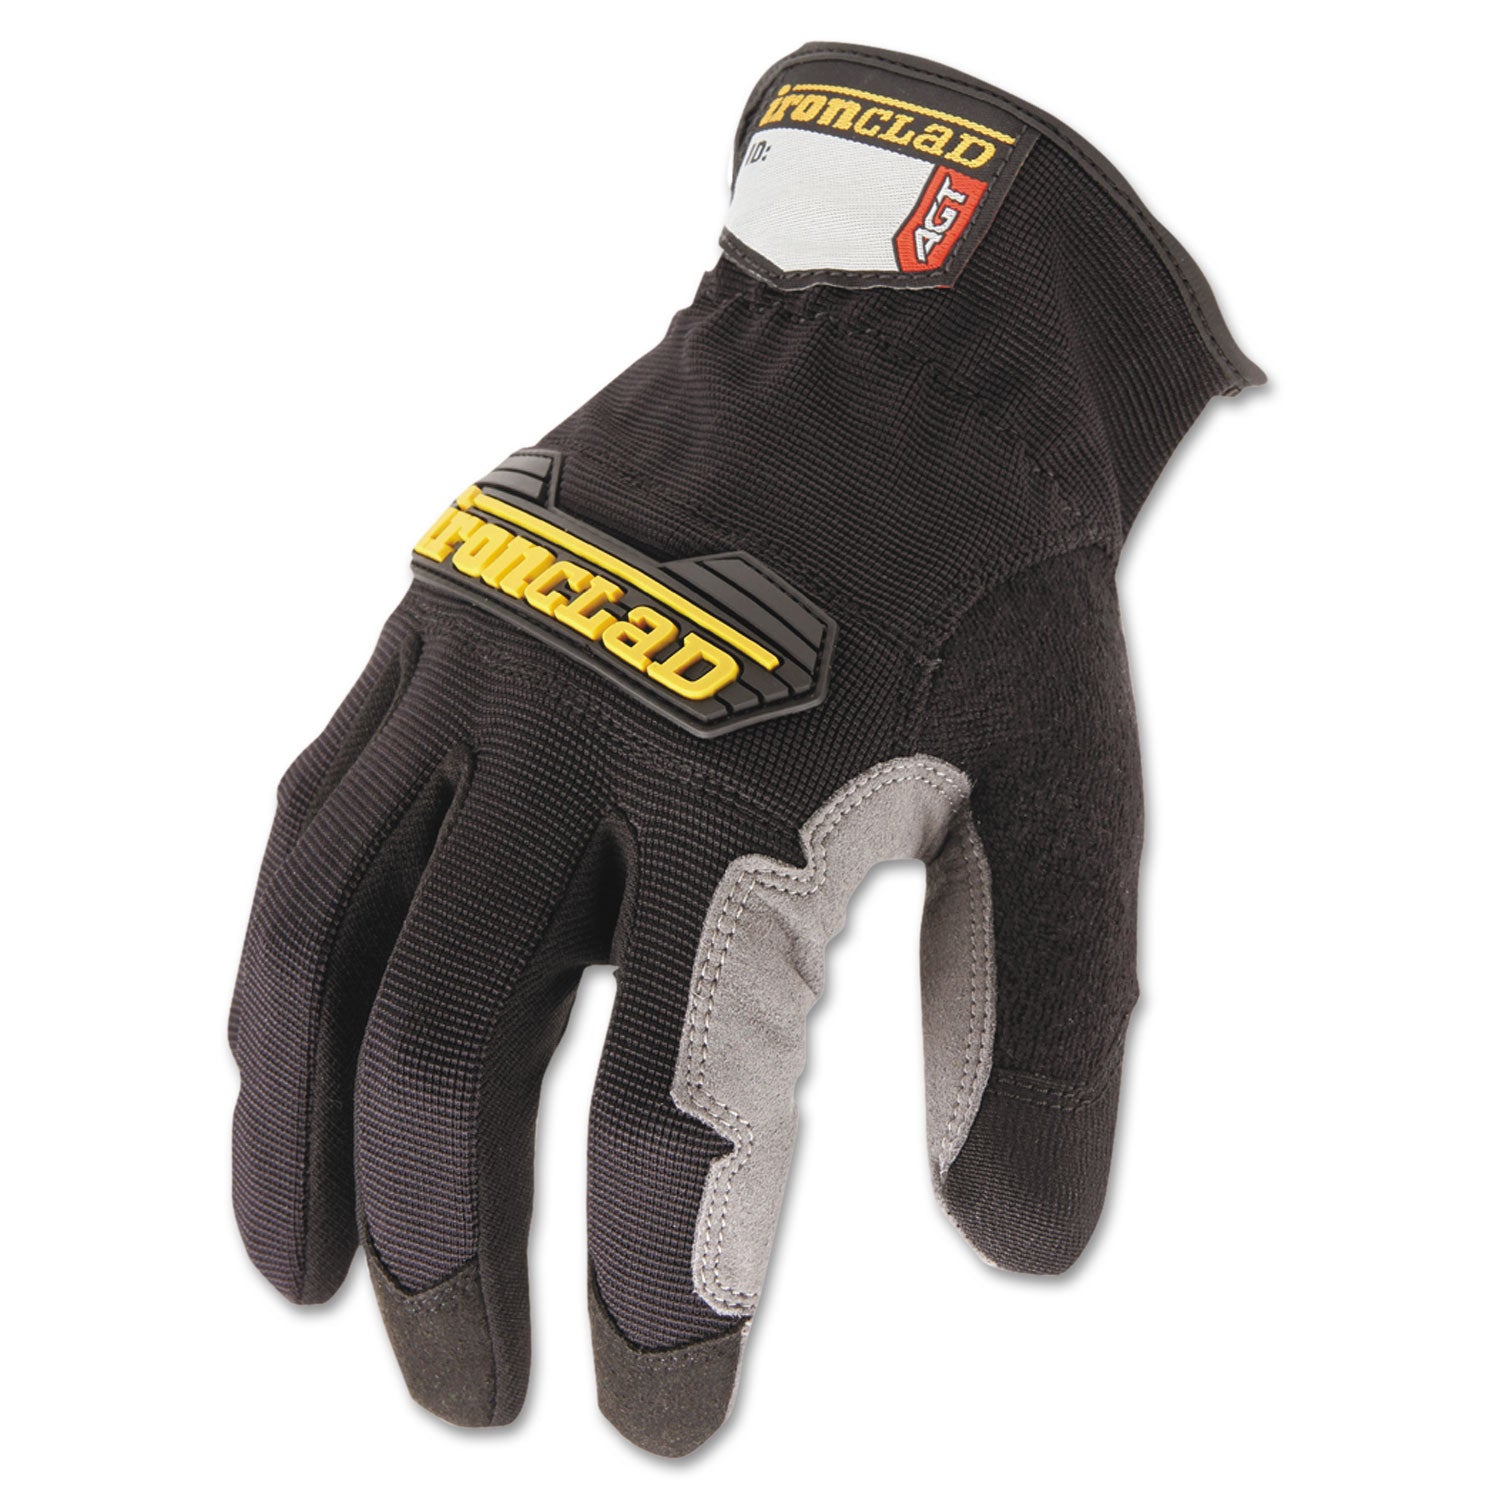 Workforce Glove, X-Large, Gray/Black, Pair - 